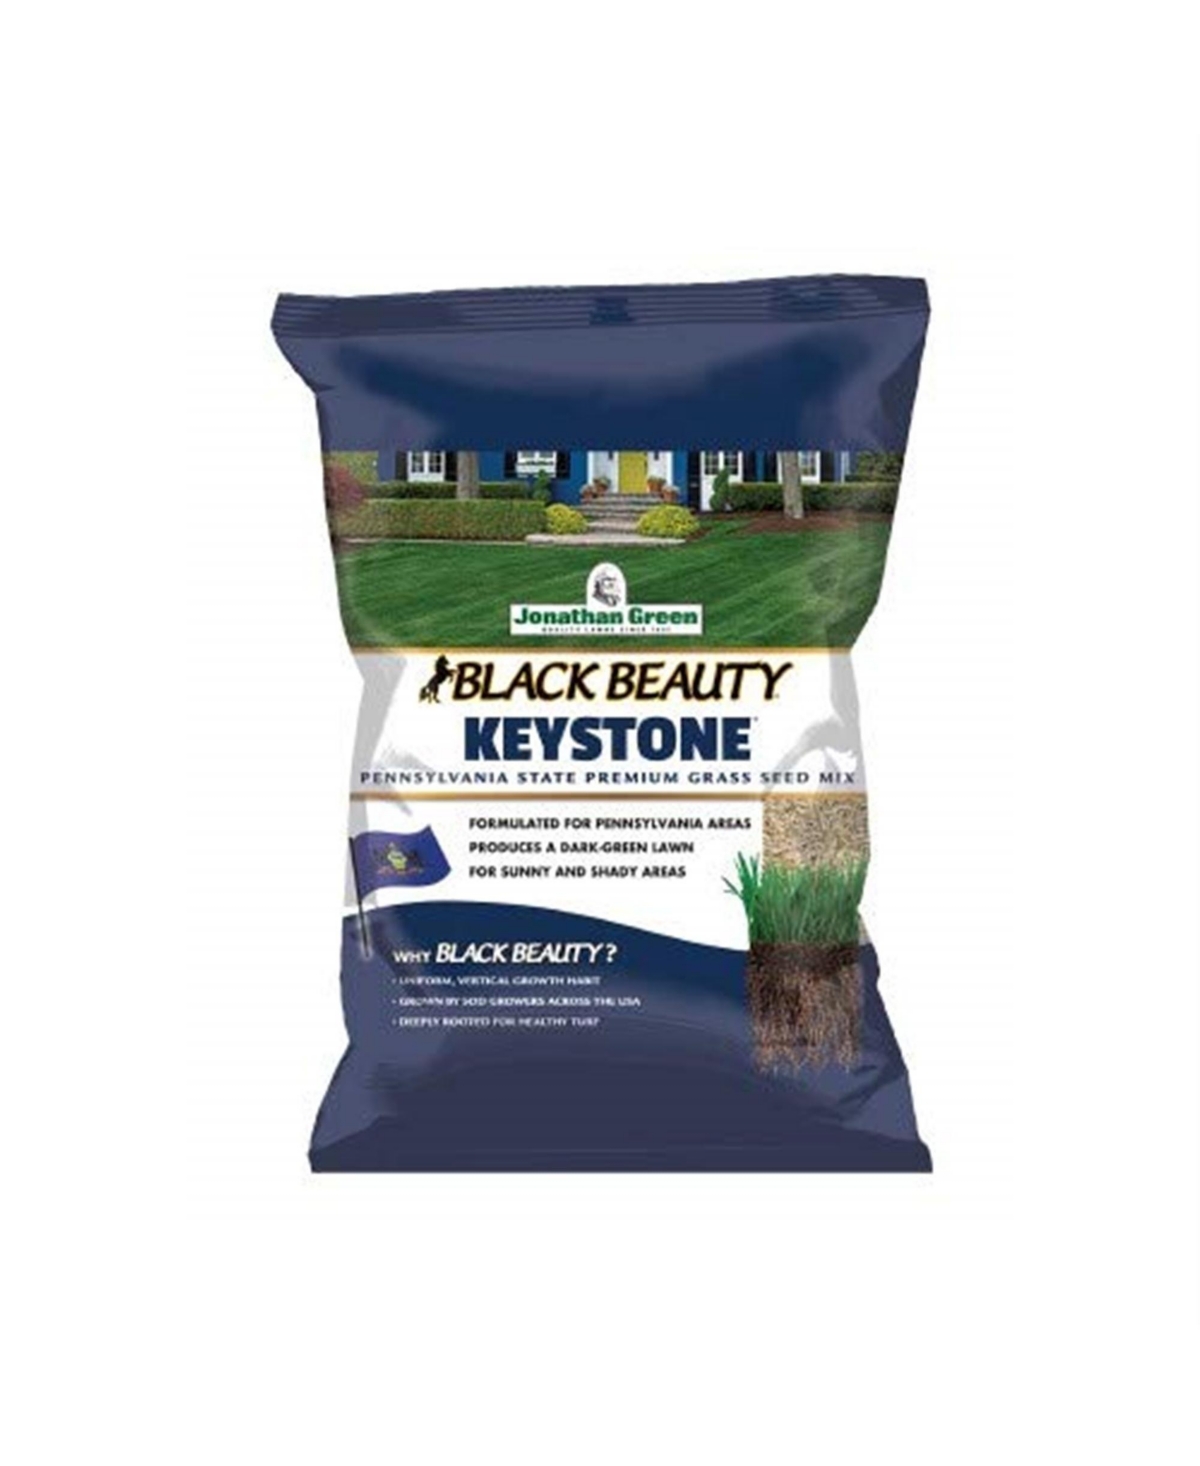 Black Beauty Keystone Pennsylvania Grass Seed Mix, 25# - Brown